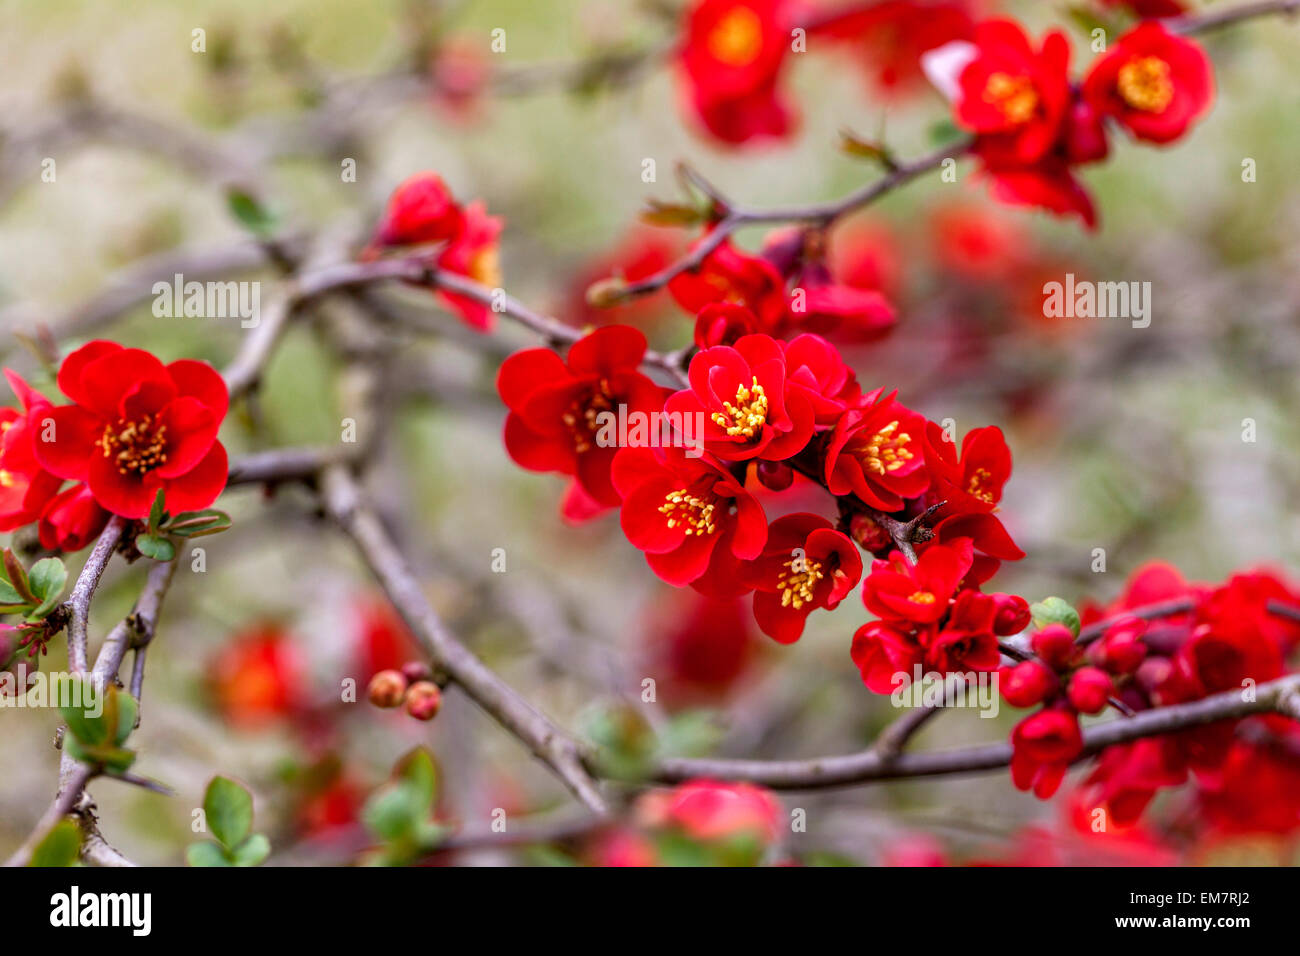 Chaenomeles speciosa Simonii Japanese quince blossom Red flowering shrubs Stock Photo